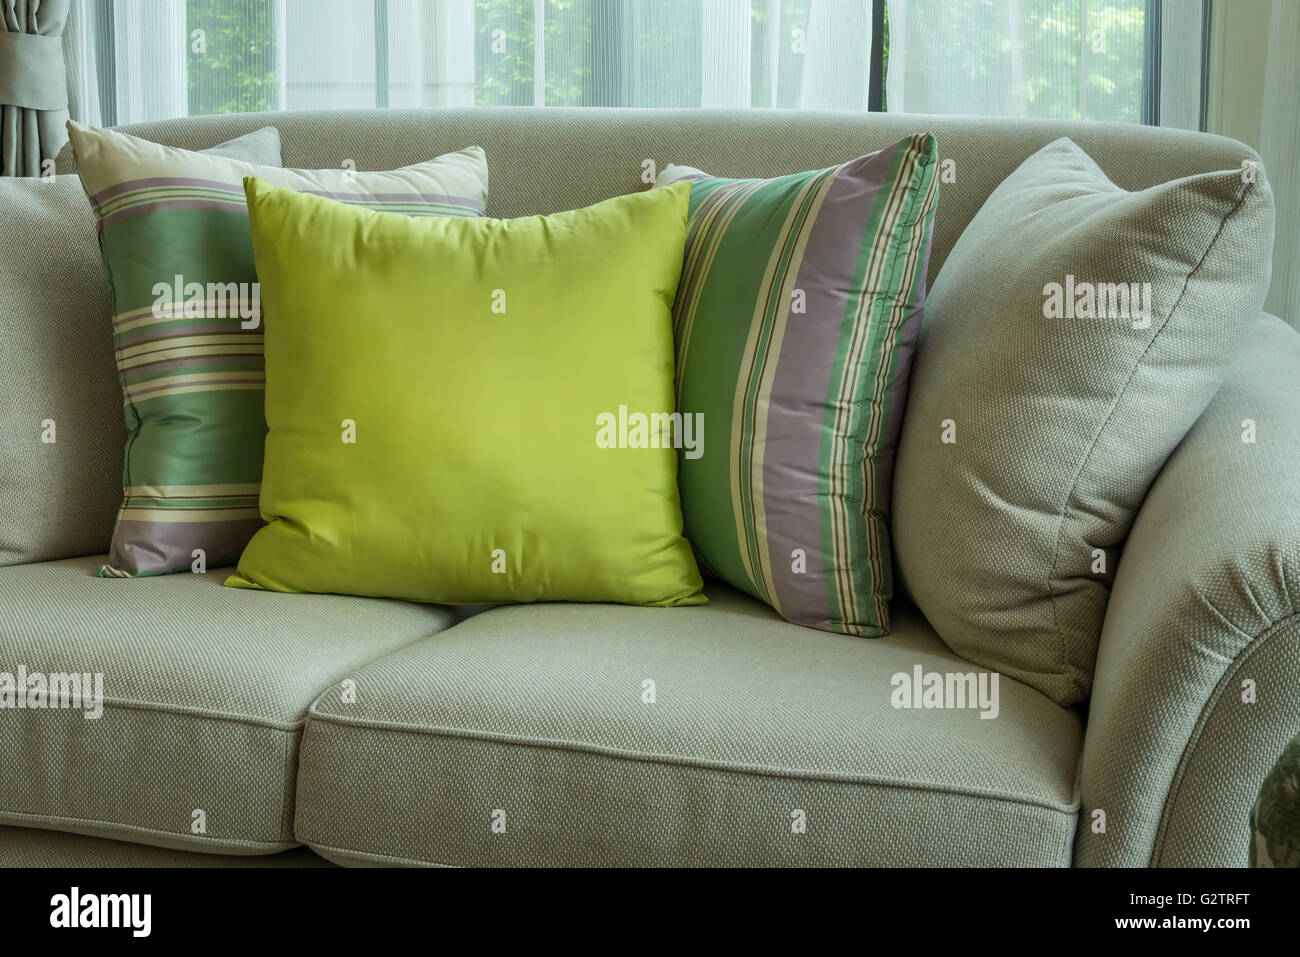 https://c8.alamy.com/comp/G2TRFT/green-pillows-on-modern-sofa-in-living-room-G2TRFT.jpg